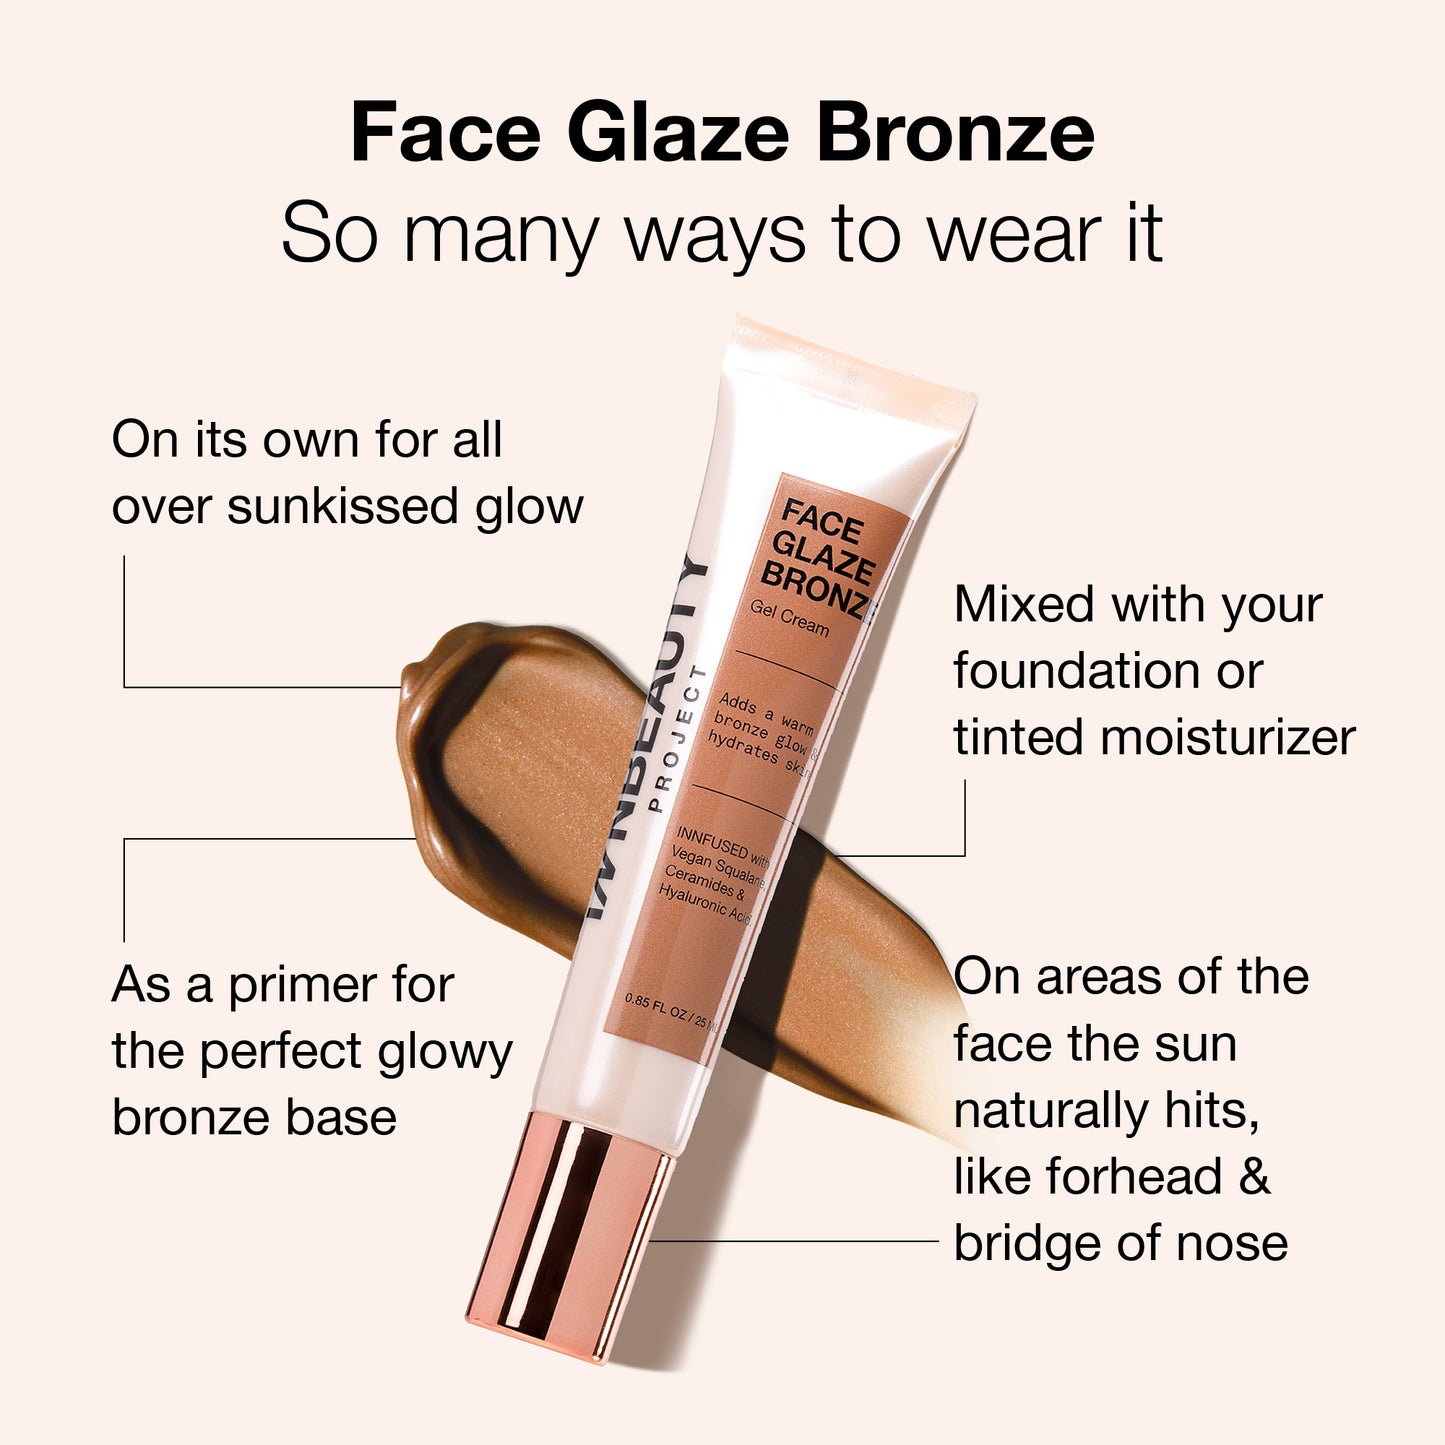 Face Glaze Bronze